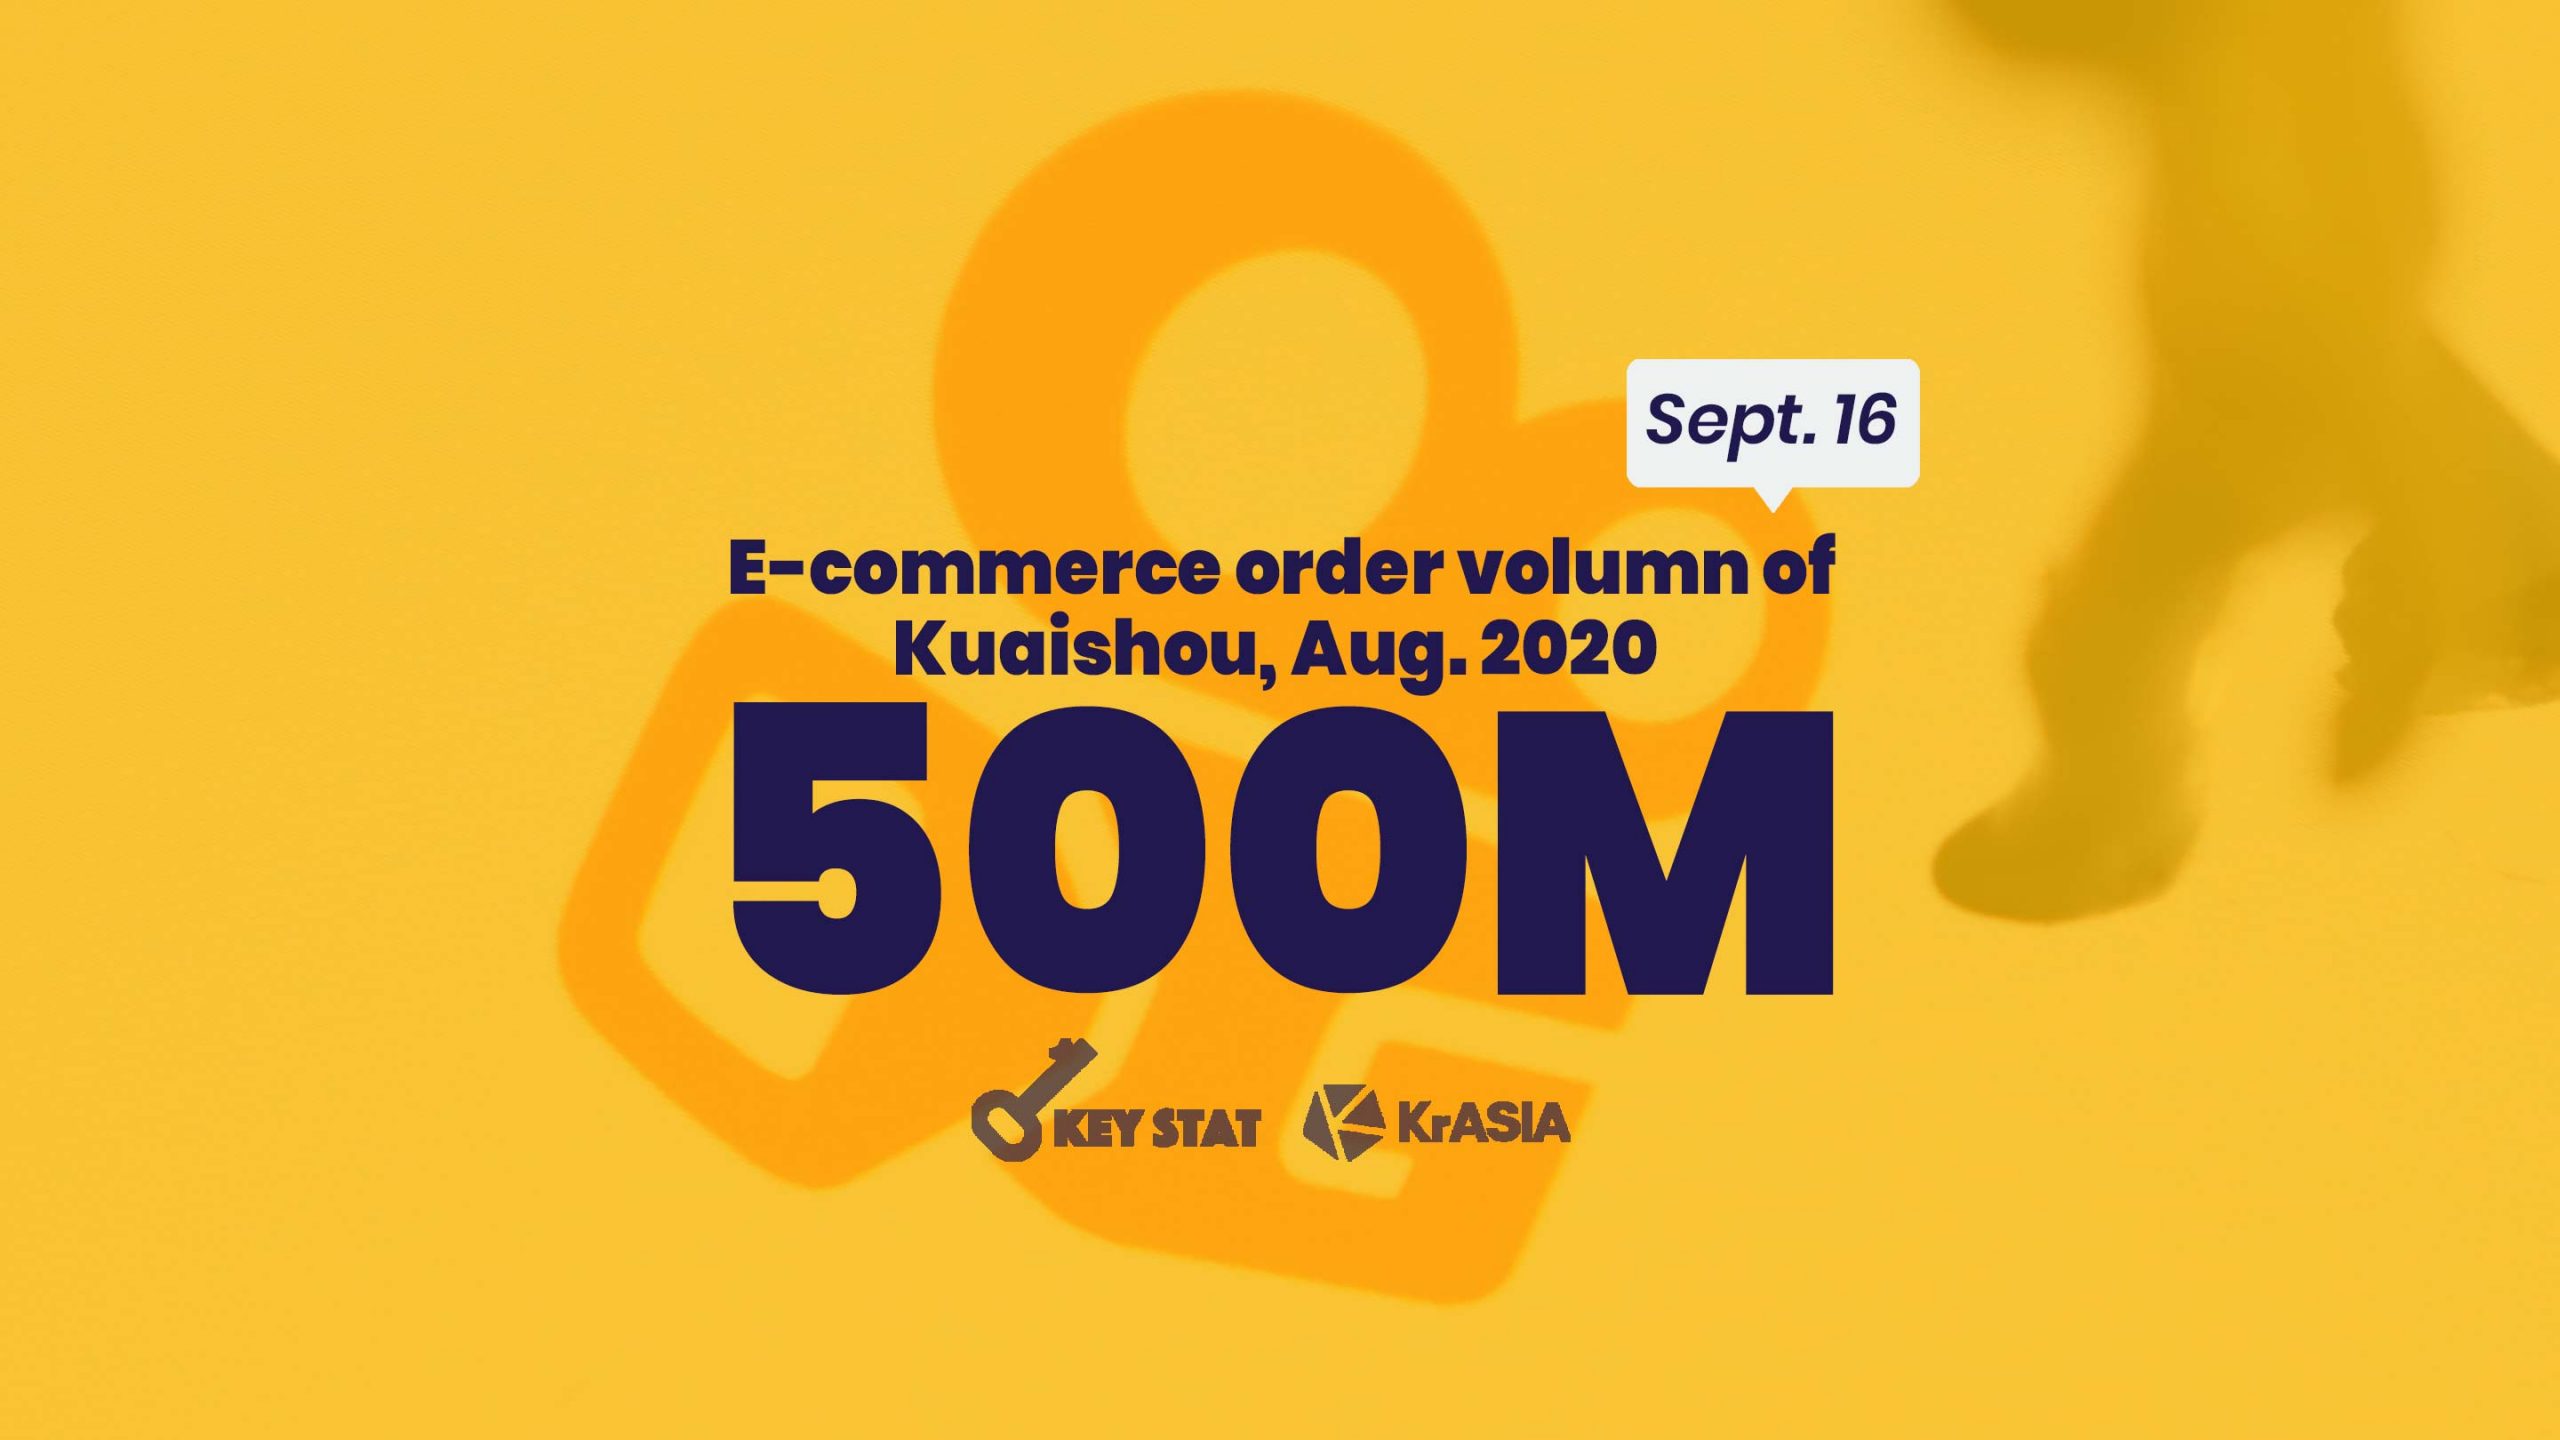 KEY STAT | Short video app Kuaishou becomes fourth-largest e-commerce platform in China